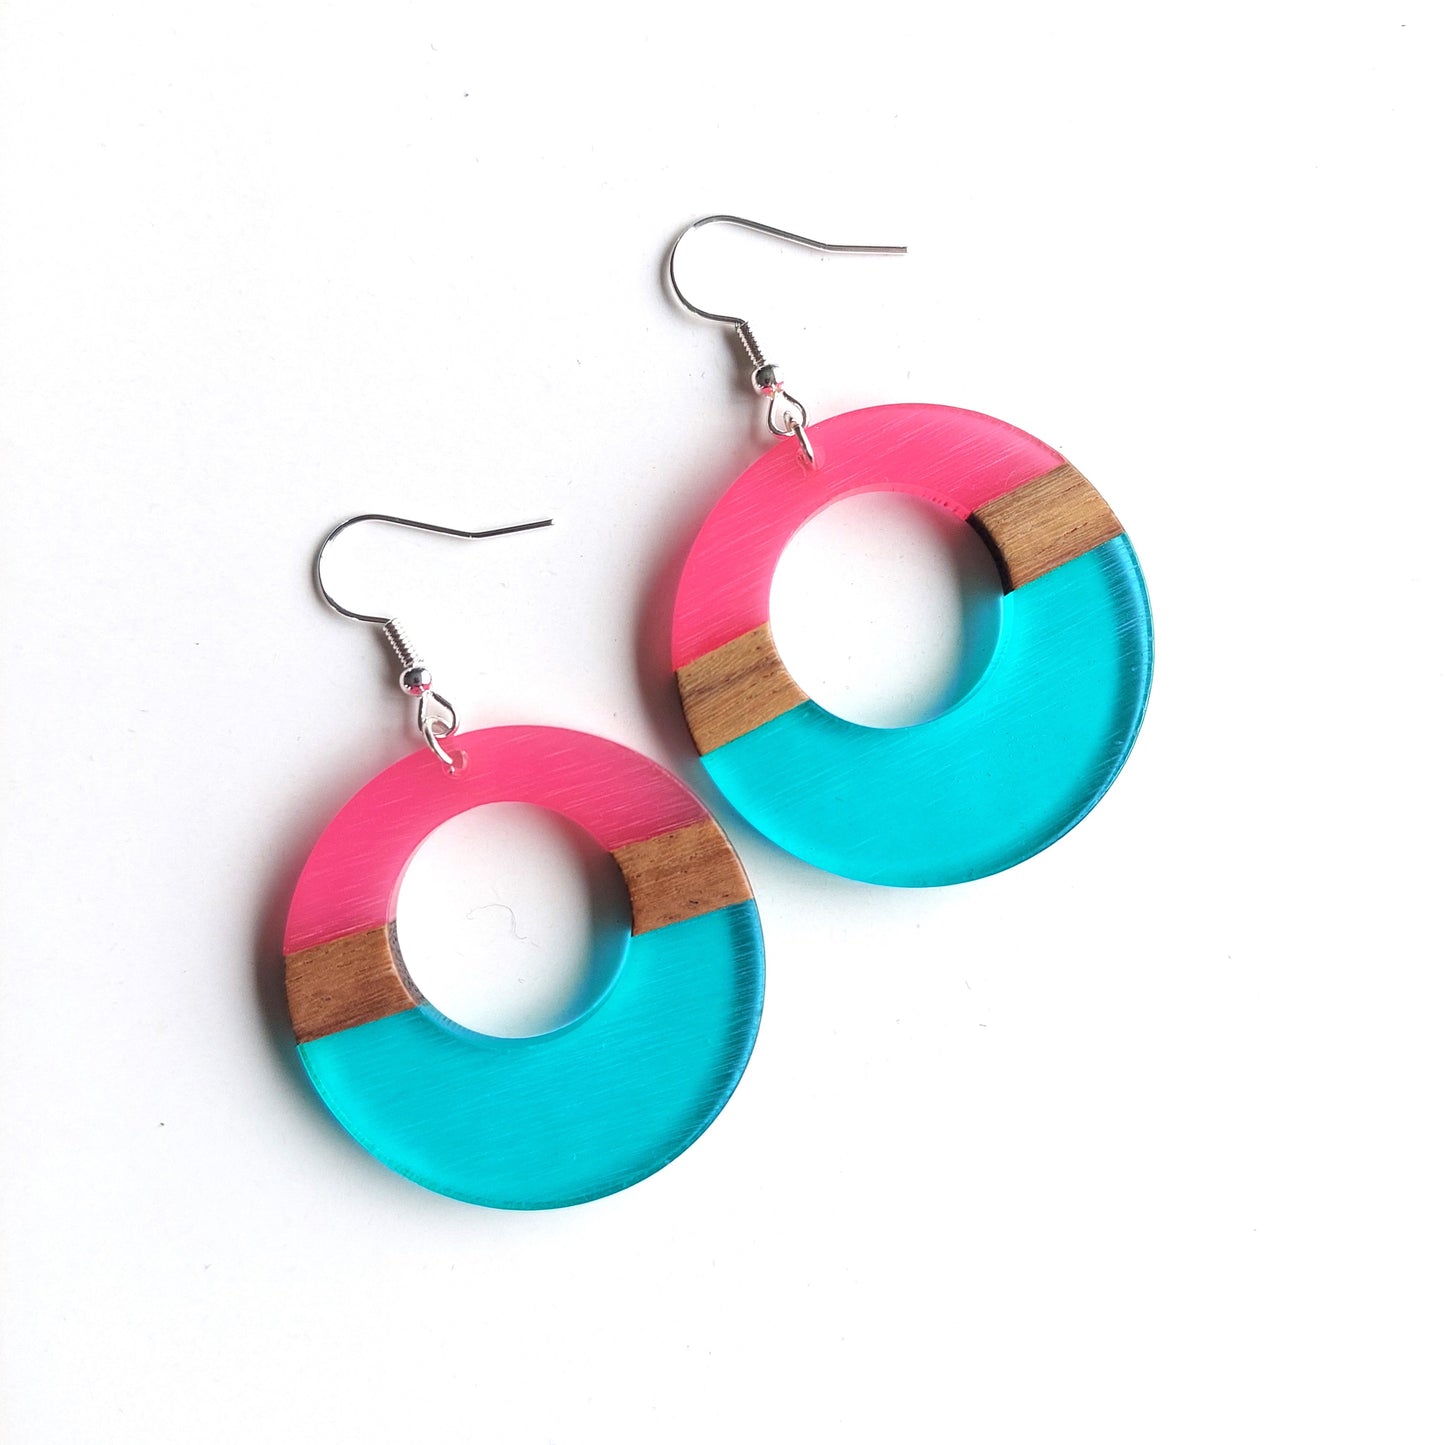 XL Wood & Resin Earrings - Pink and Aqua